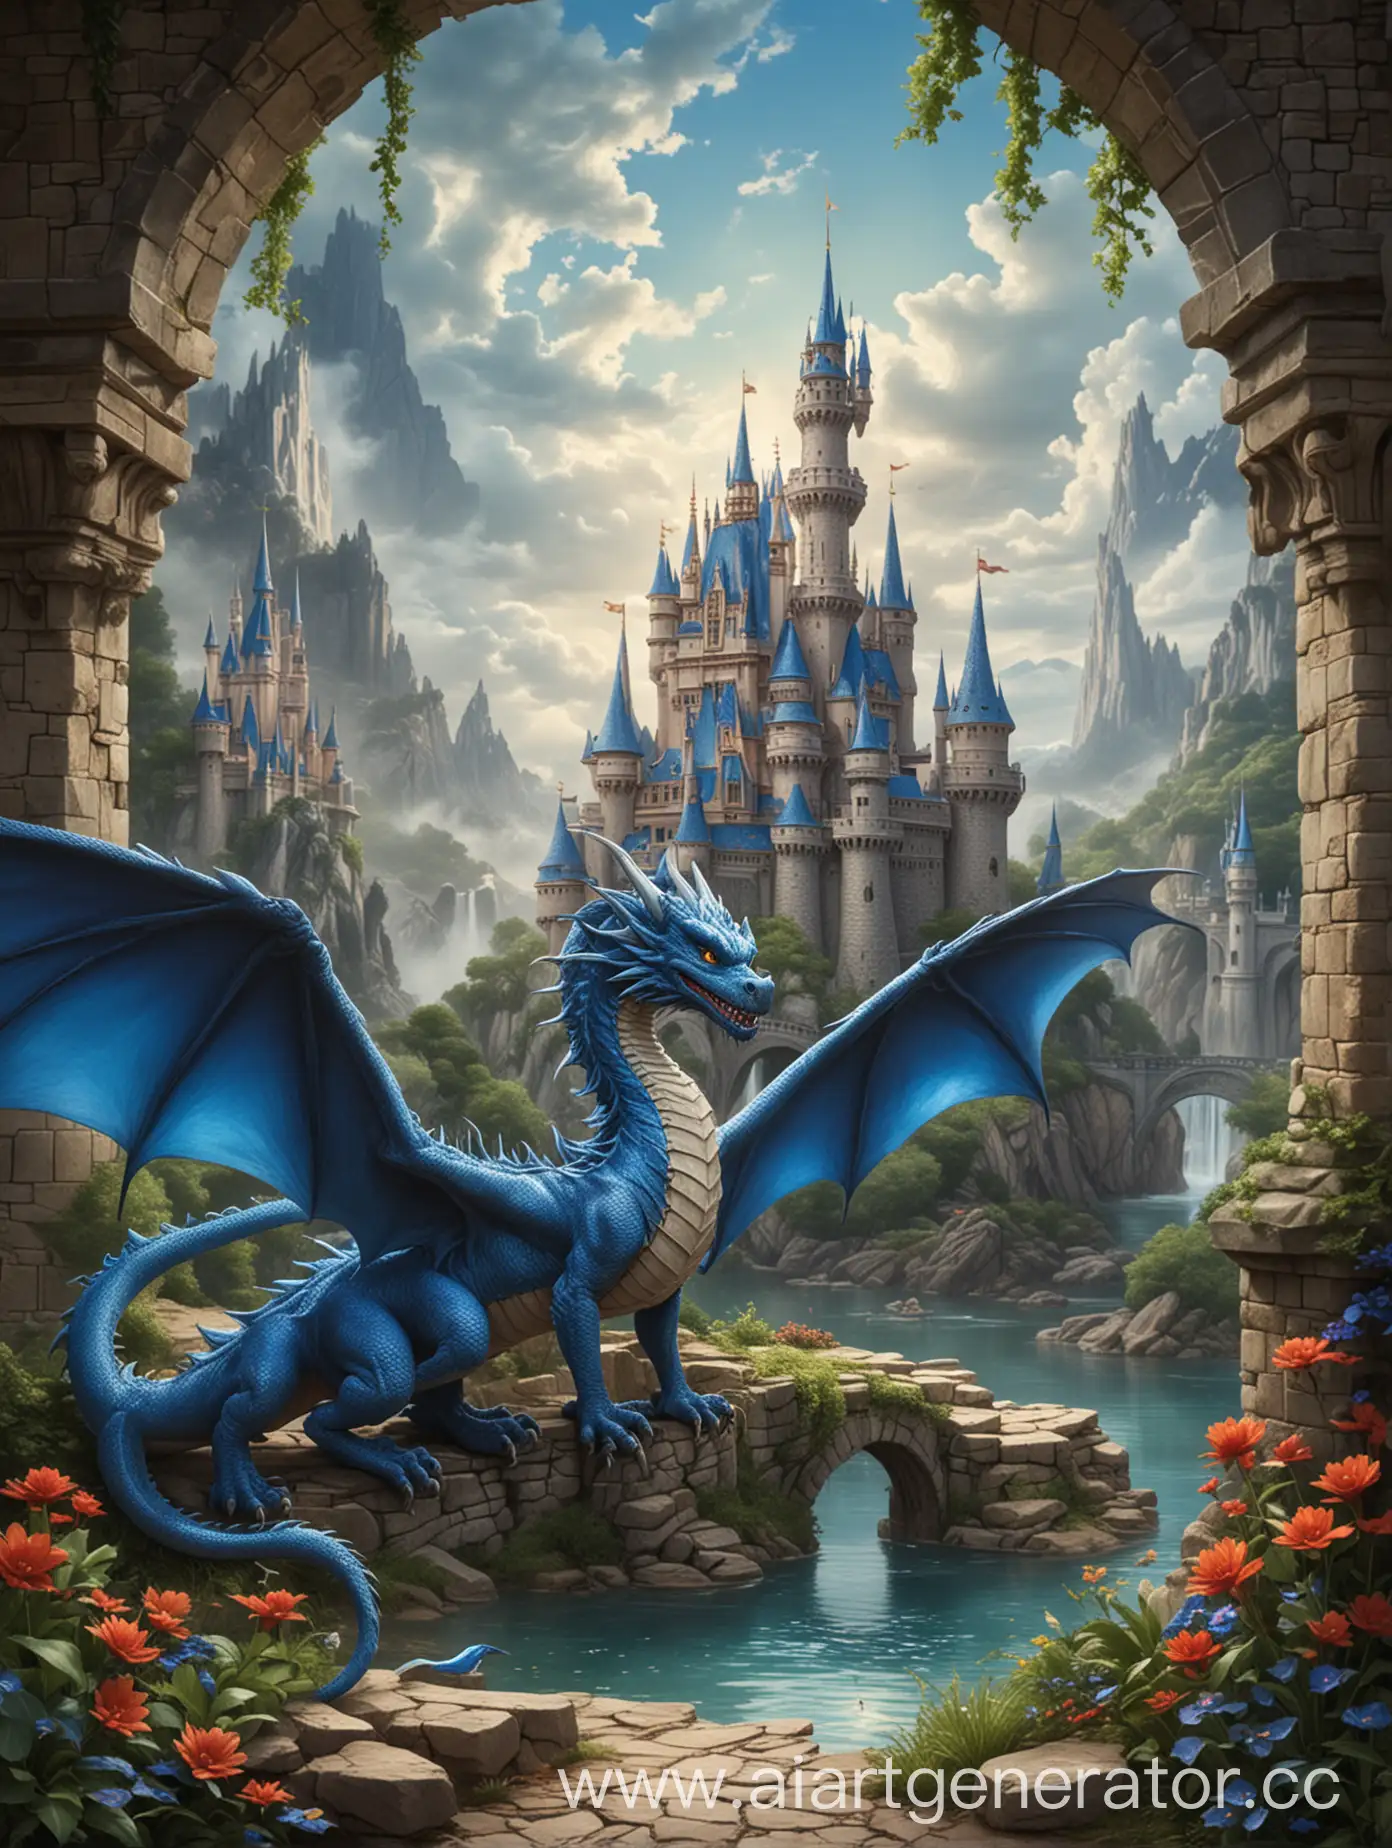 Disney-Castle-with-Blue-Dragon-Fantasy-Art